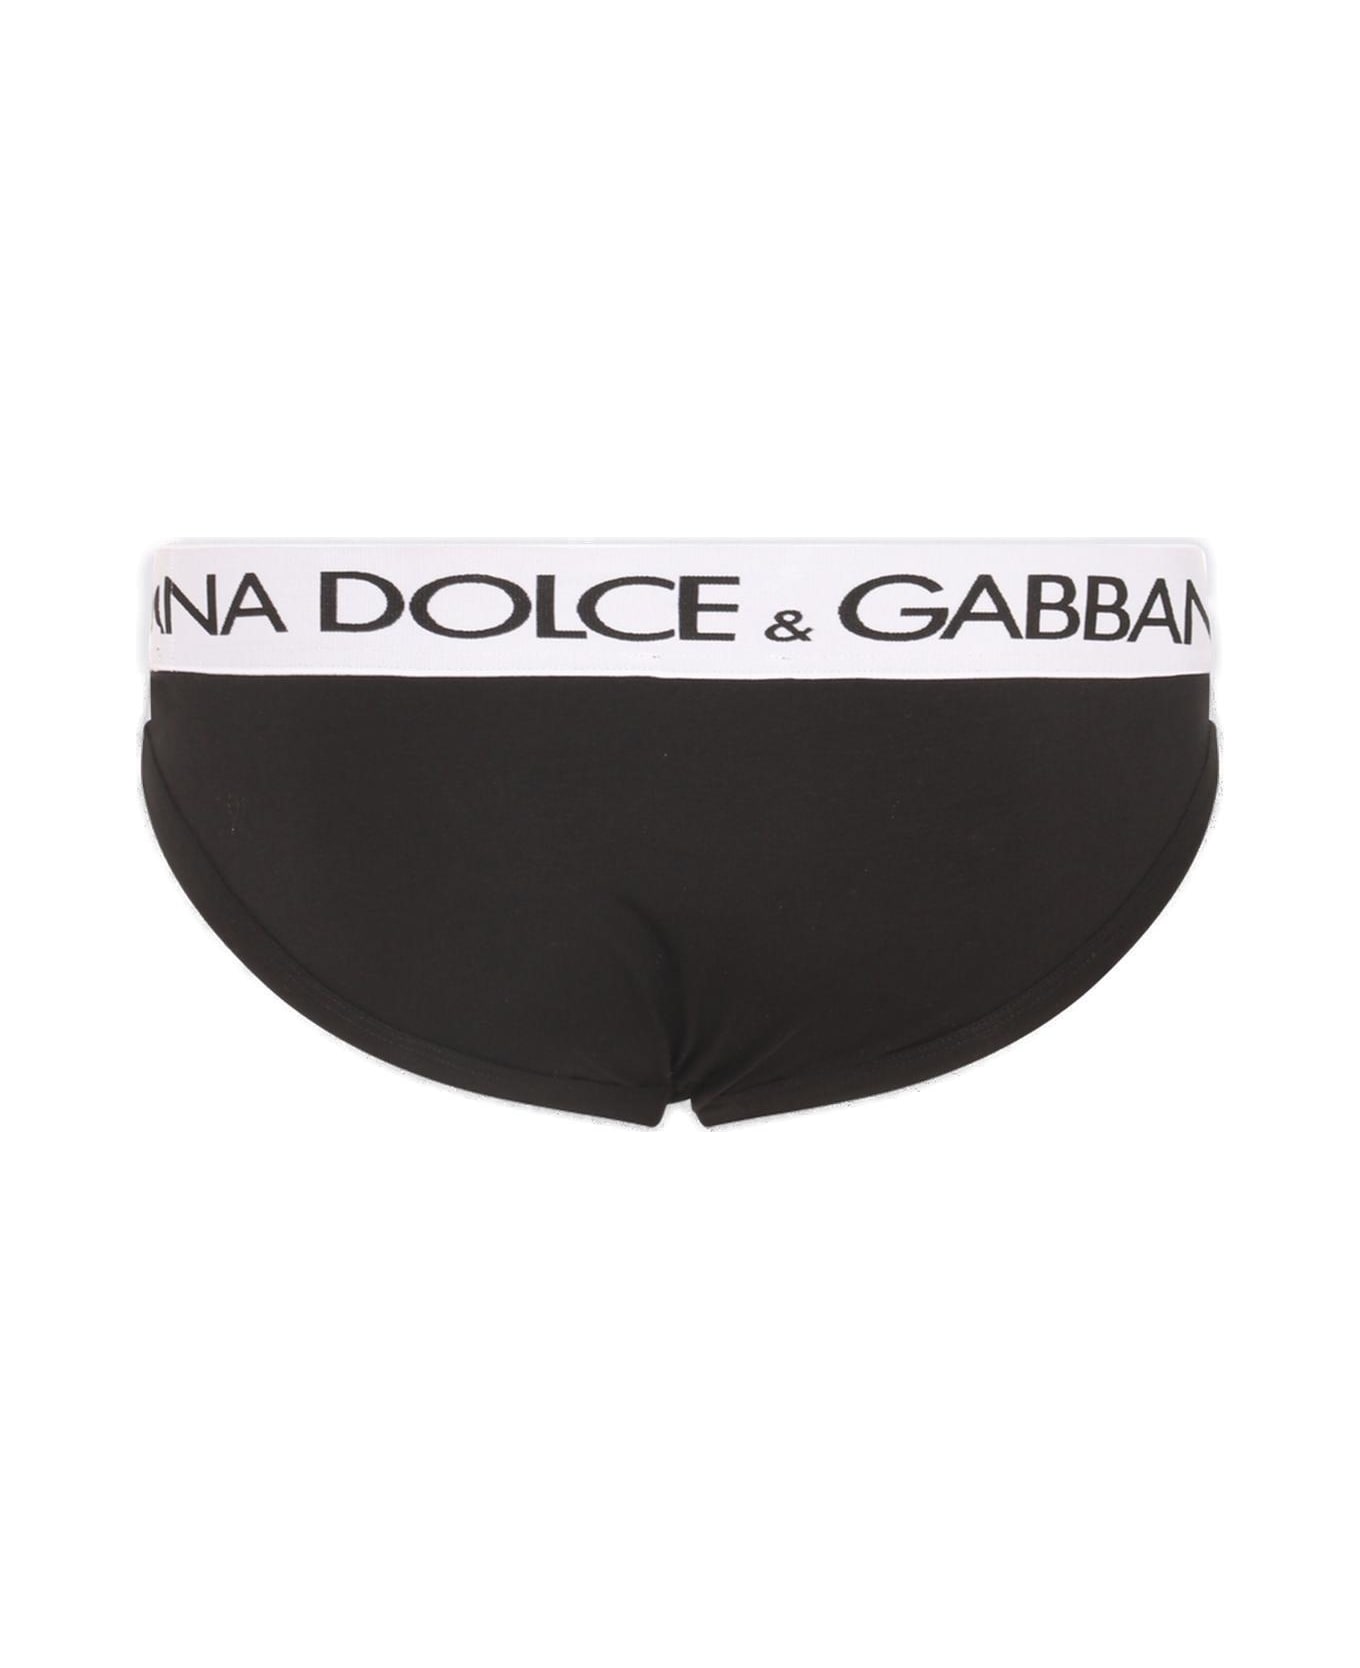 Dolce & Gabbana Elasticated Logo Waist Briefs - Black